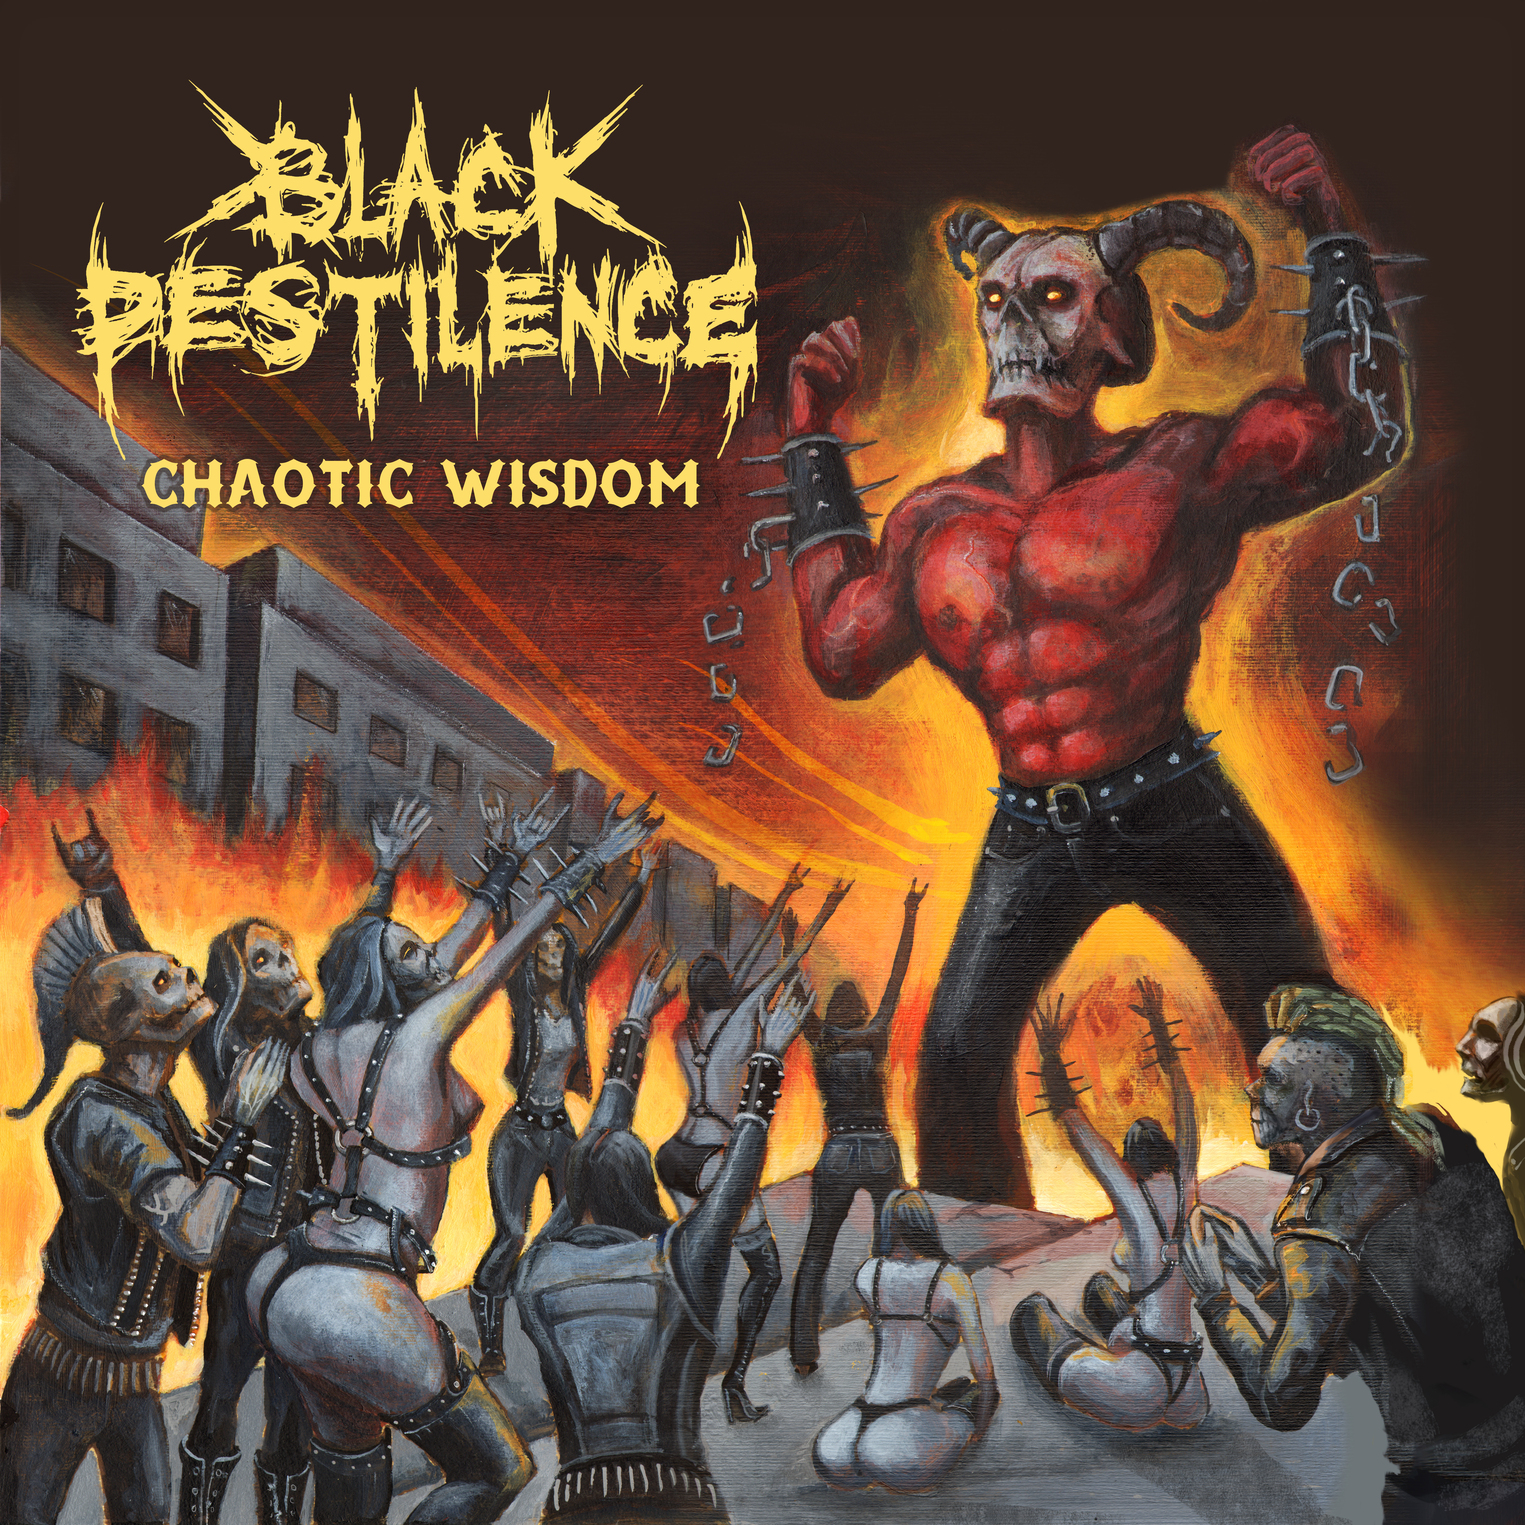 ALBUM REVIEW: Chaotic Wisdom by Black Pestilence